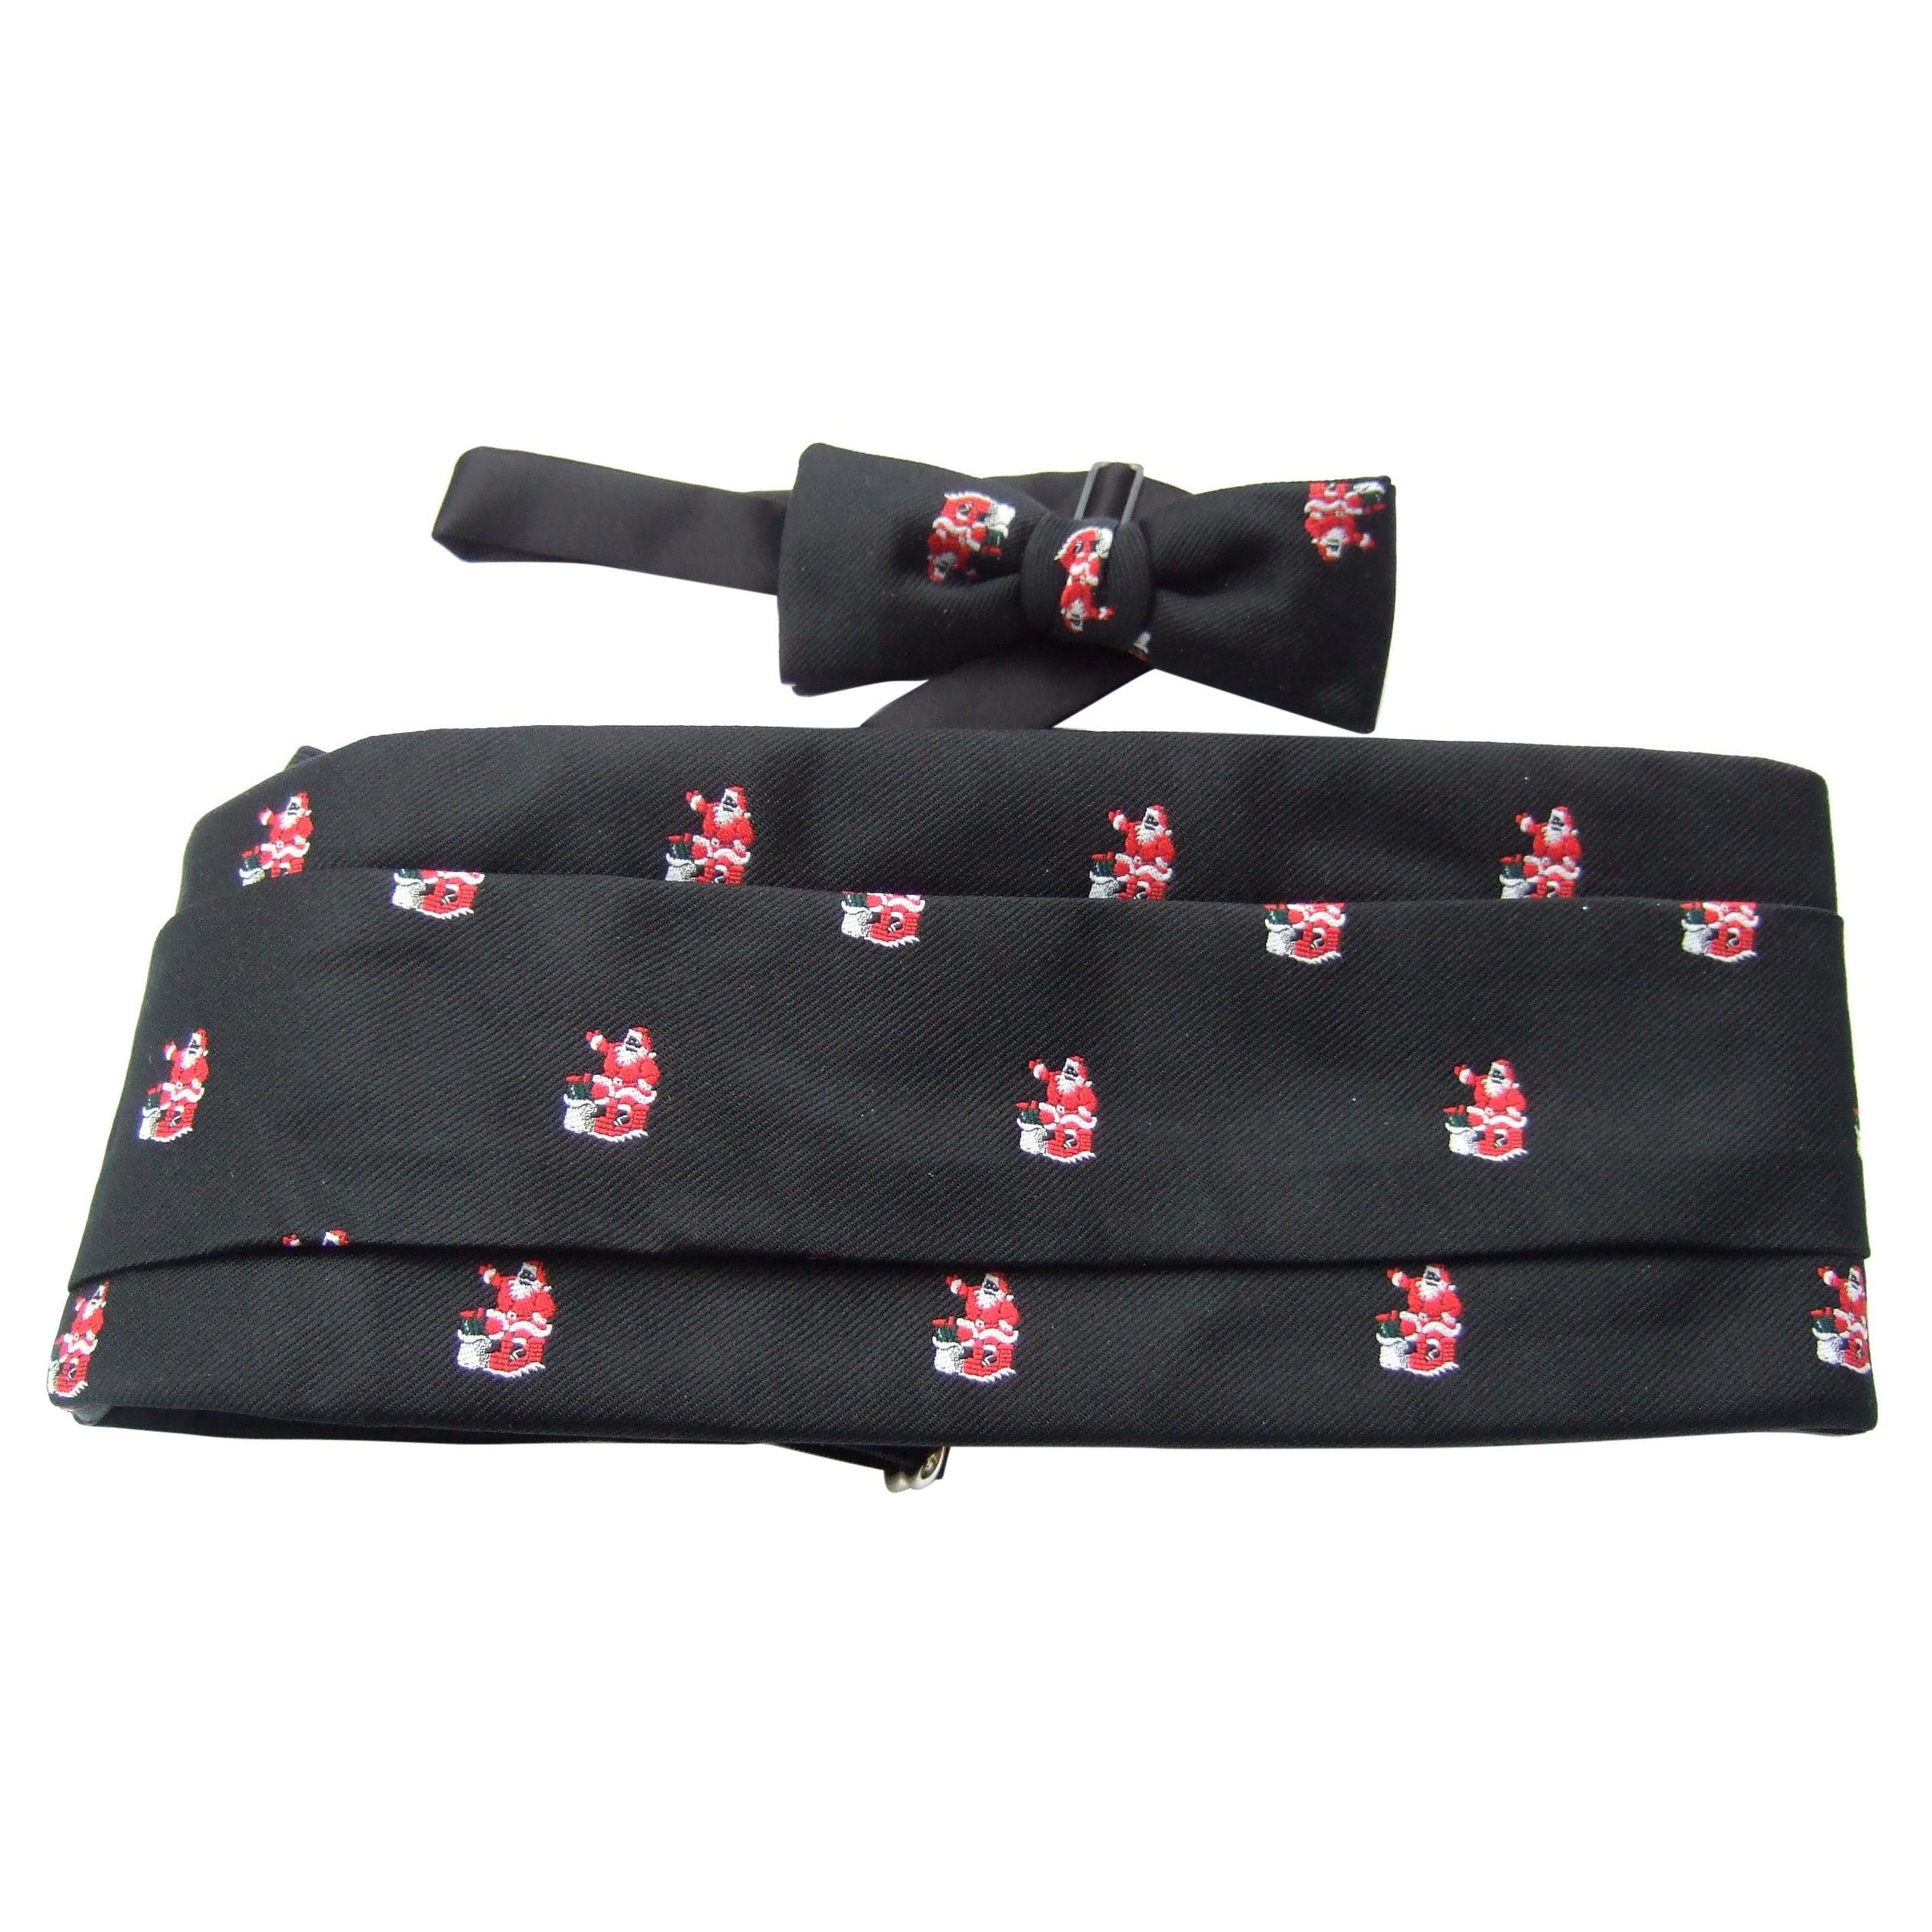 Personalized Bow Tie/Cummerbund - Embellish Accessories and Gifts